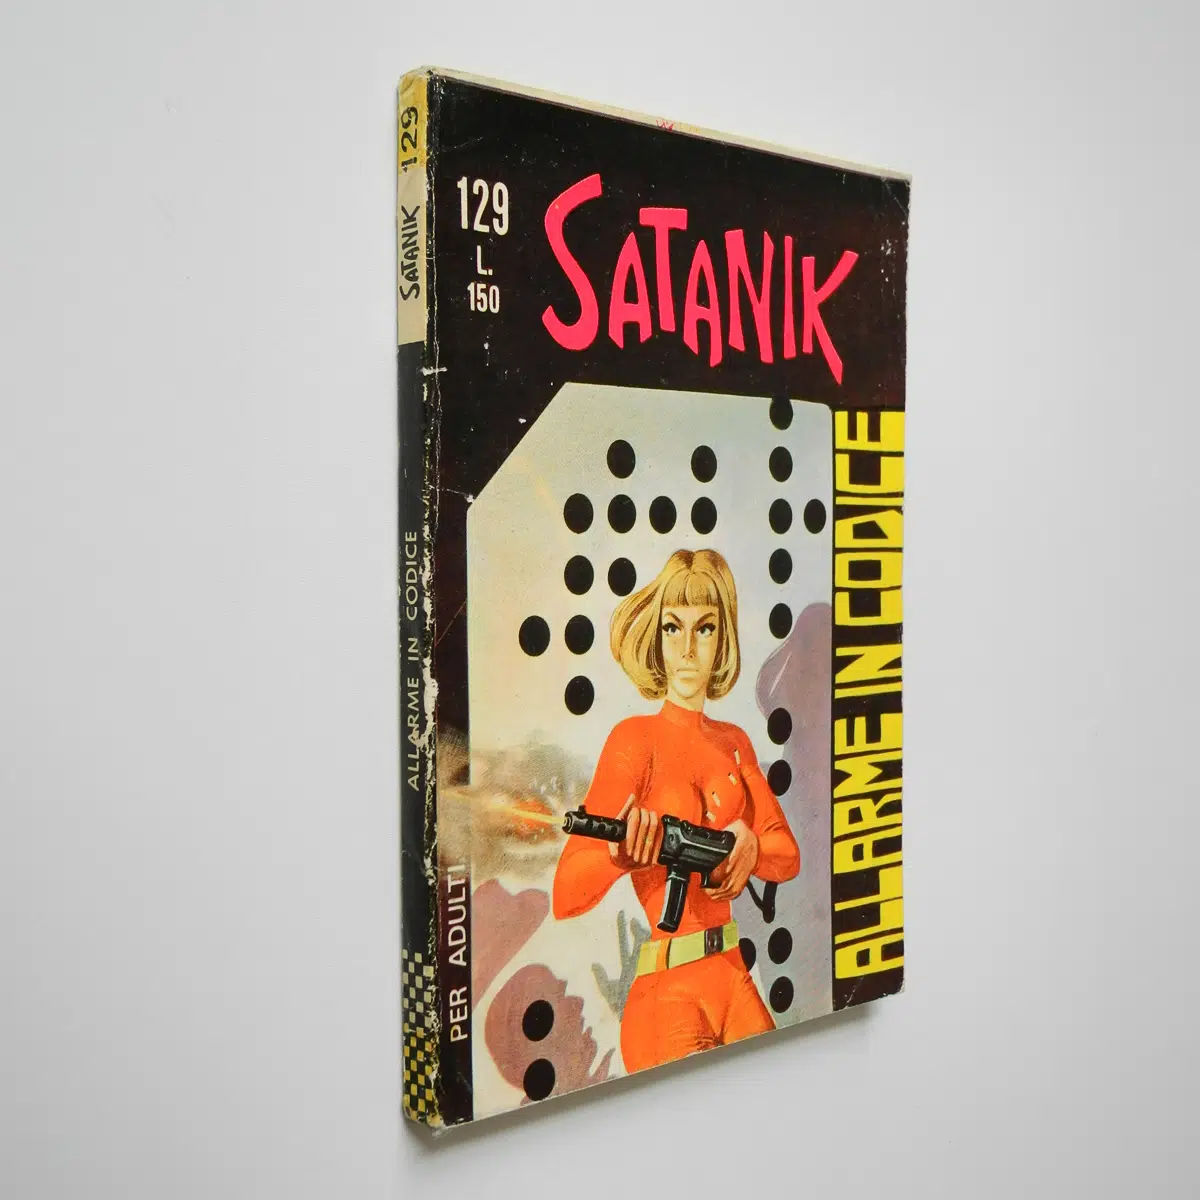 Satanik n. 129 Allarme in codice